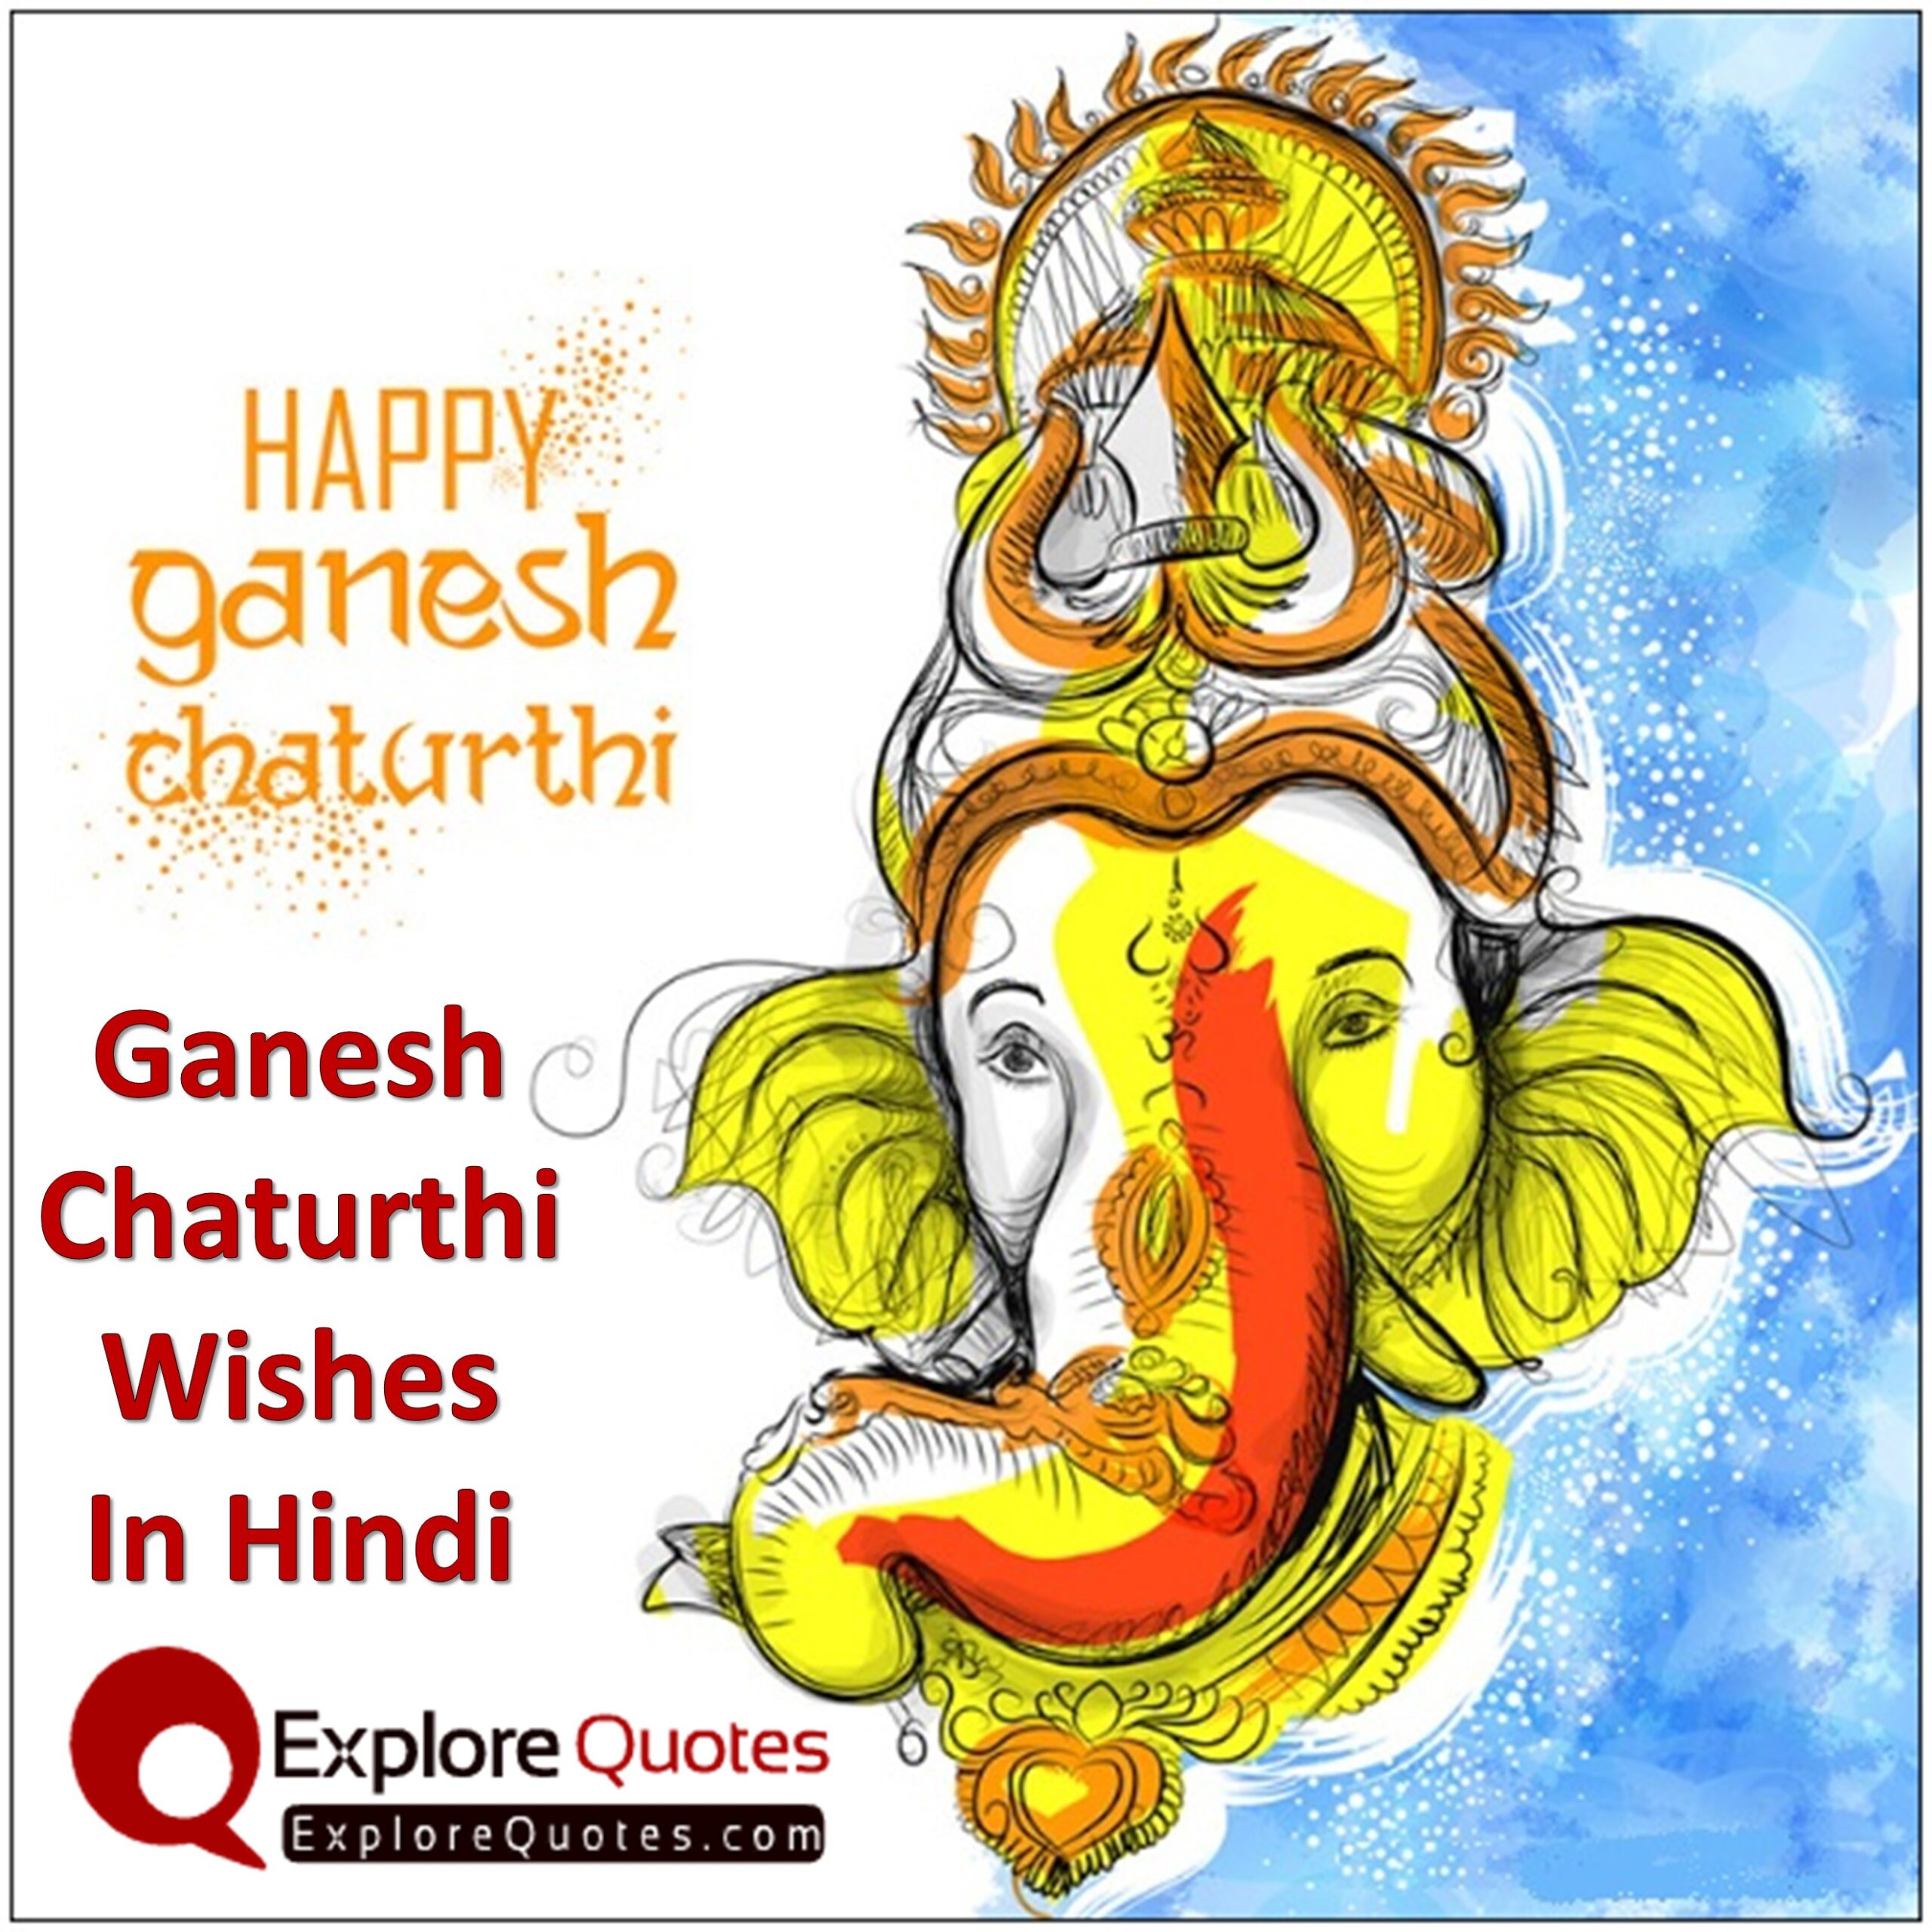 Ganesh Chaturthi Wishes In Hindi | Explore Quotes